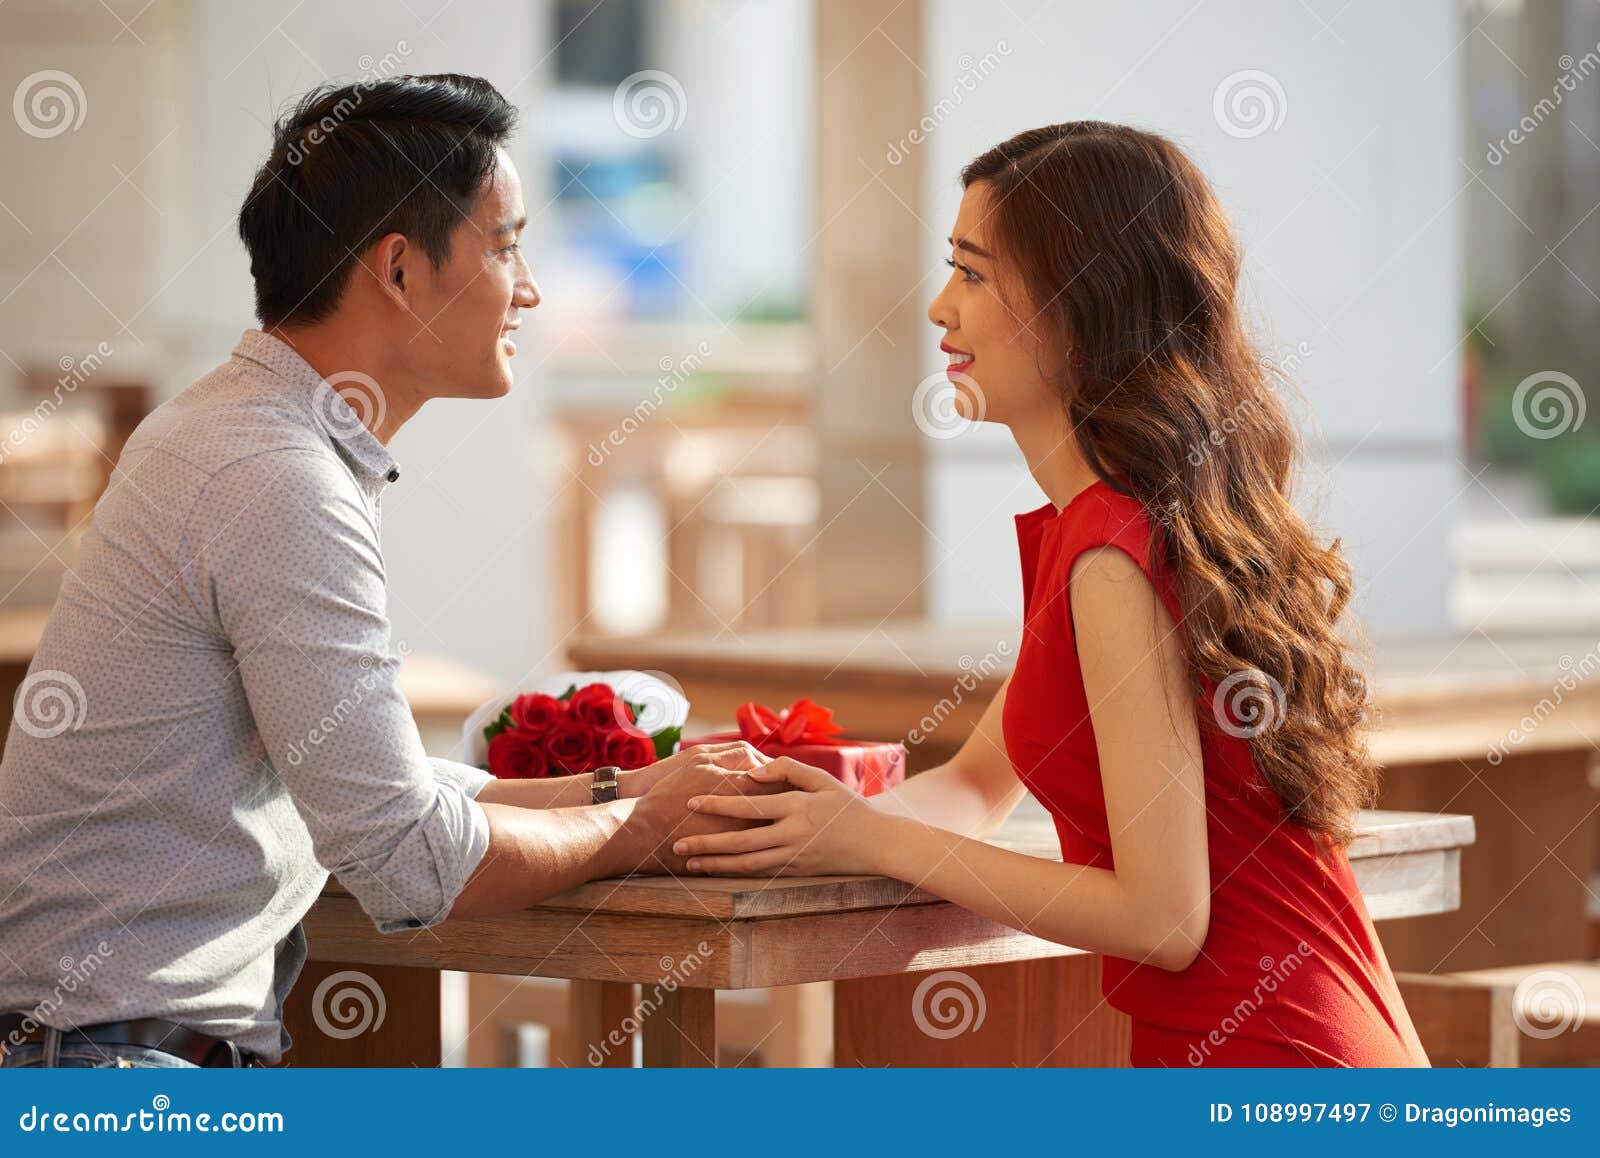 Dating Couple Stock Image Image Of Women Boyfriend 108997497